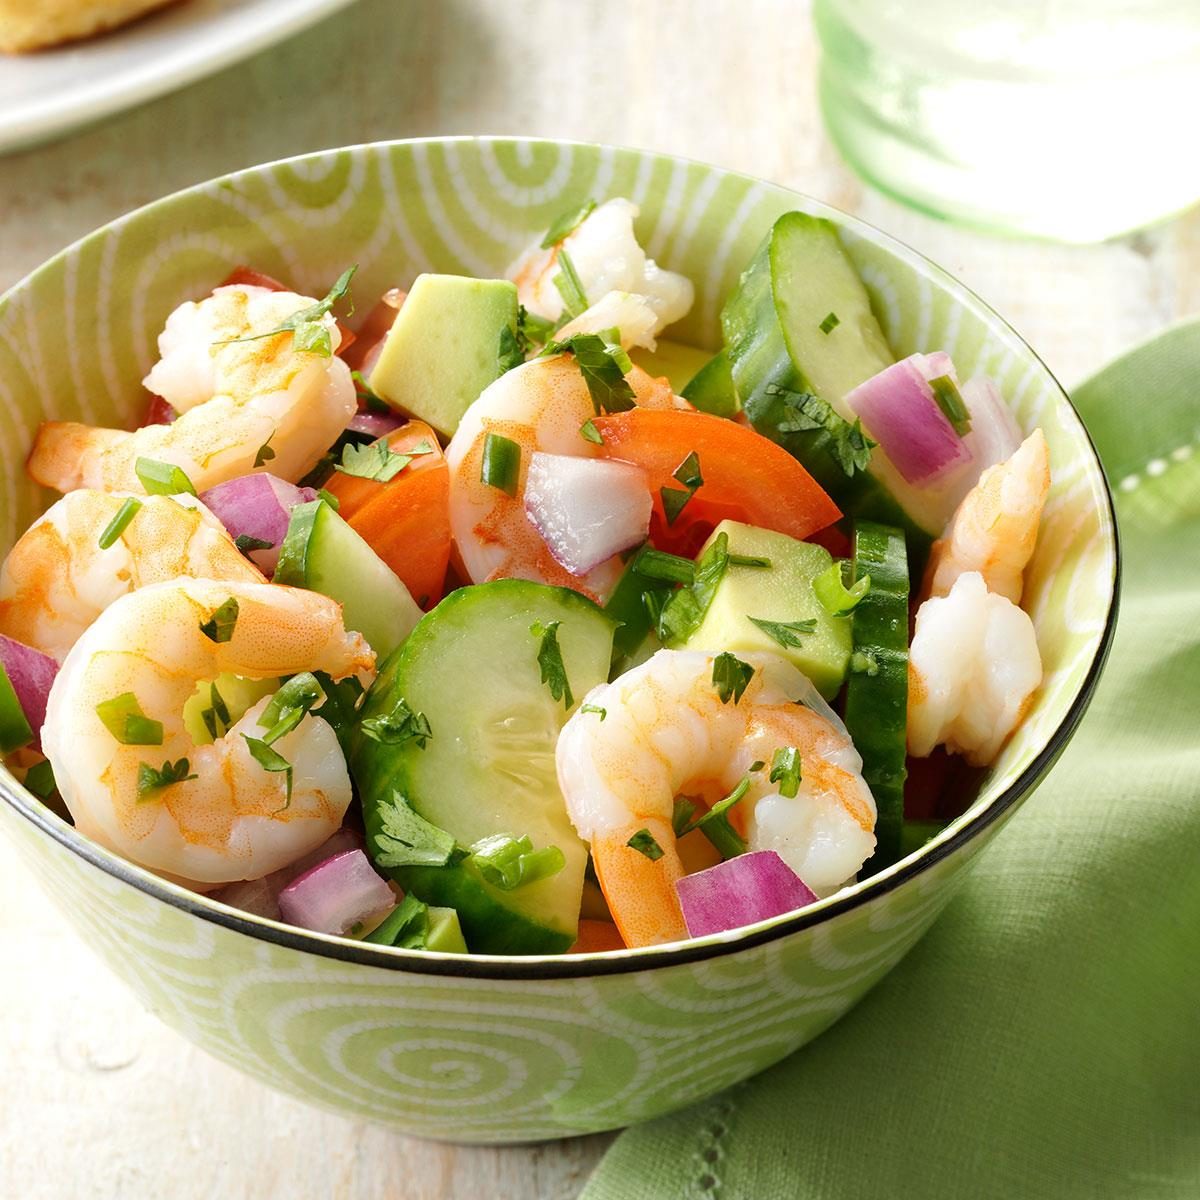 https://www.tasteofhome.com/wp-content/uploads/2018/01/Shrimp-Veggie-Salad_exps166031_HCK143243D09_17_6bC_RMS-1.jpg?fit=700%2C1024